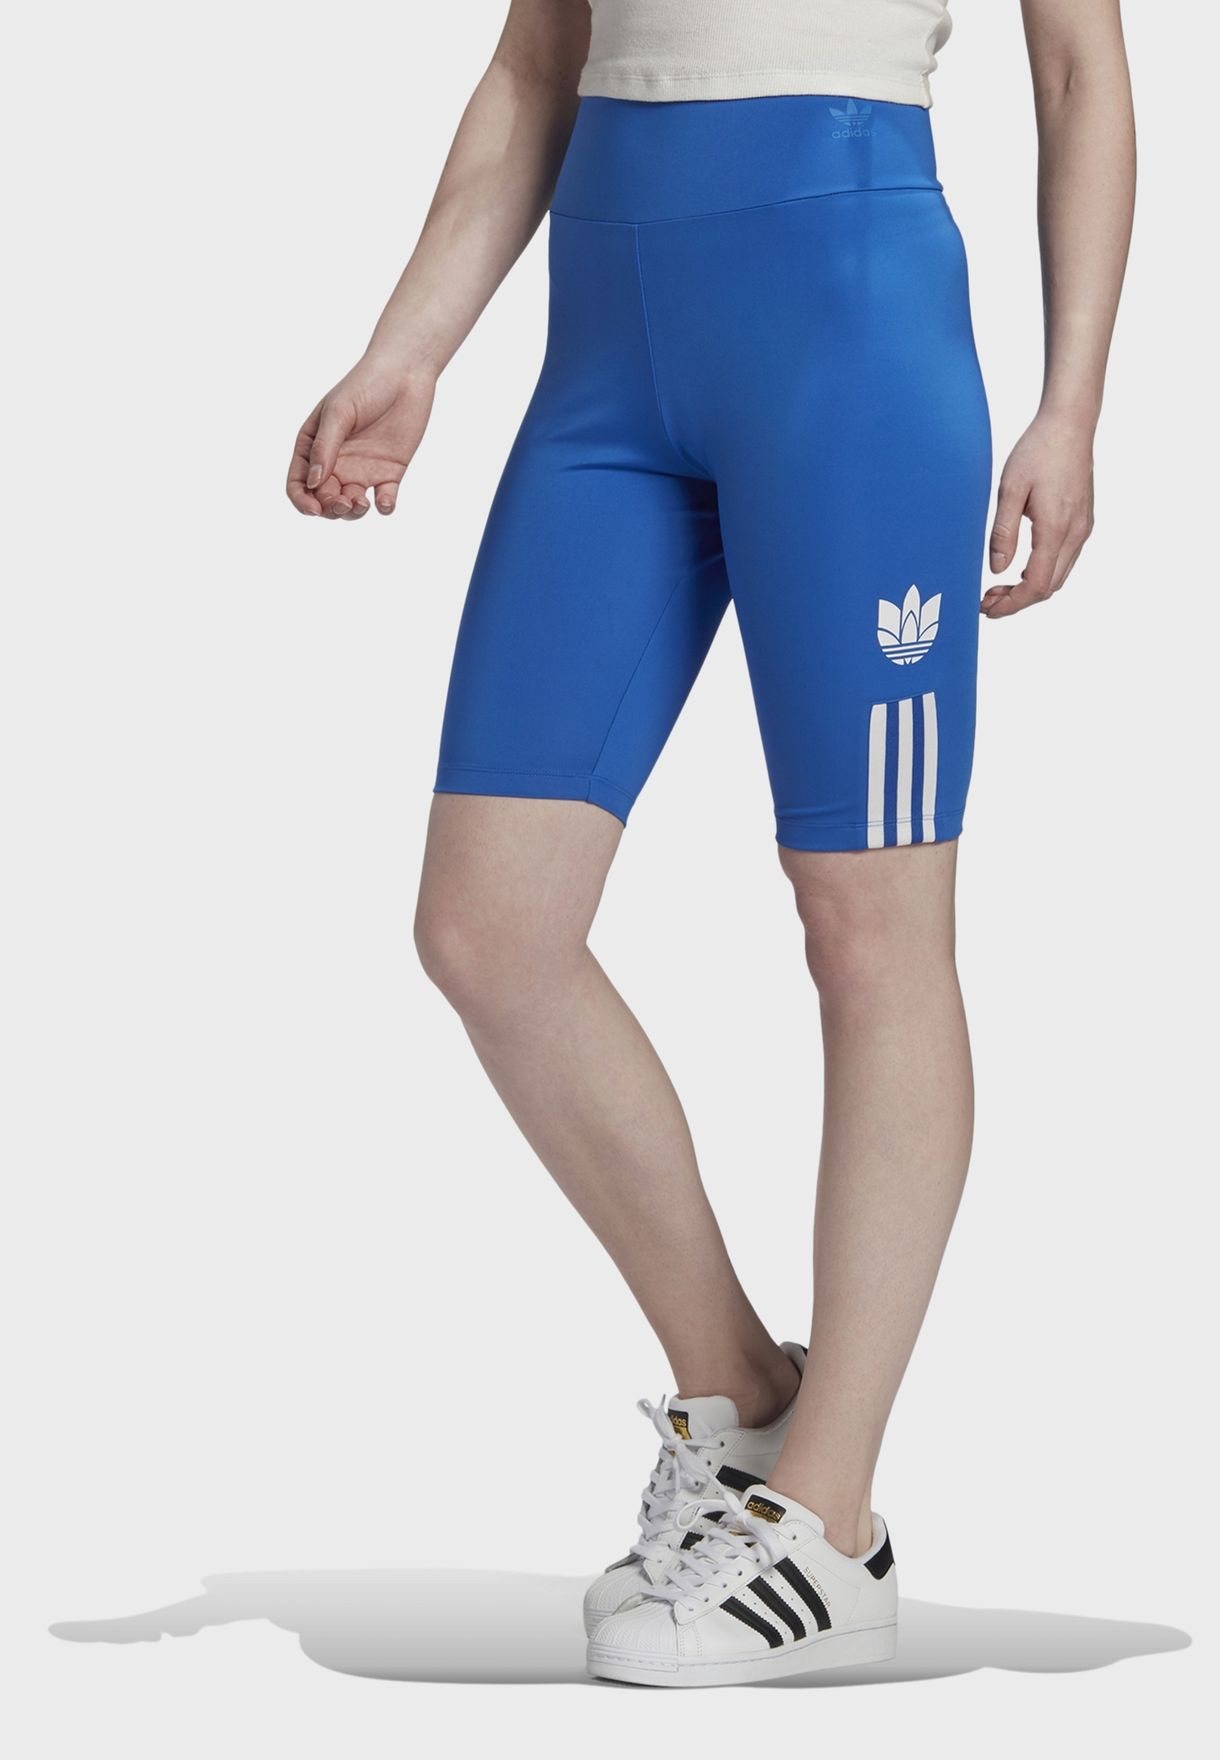 adidas bike shorts